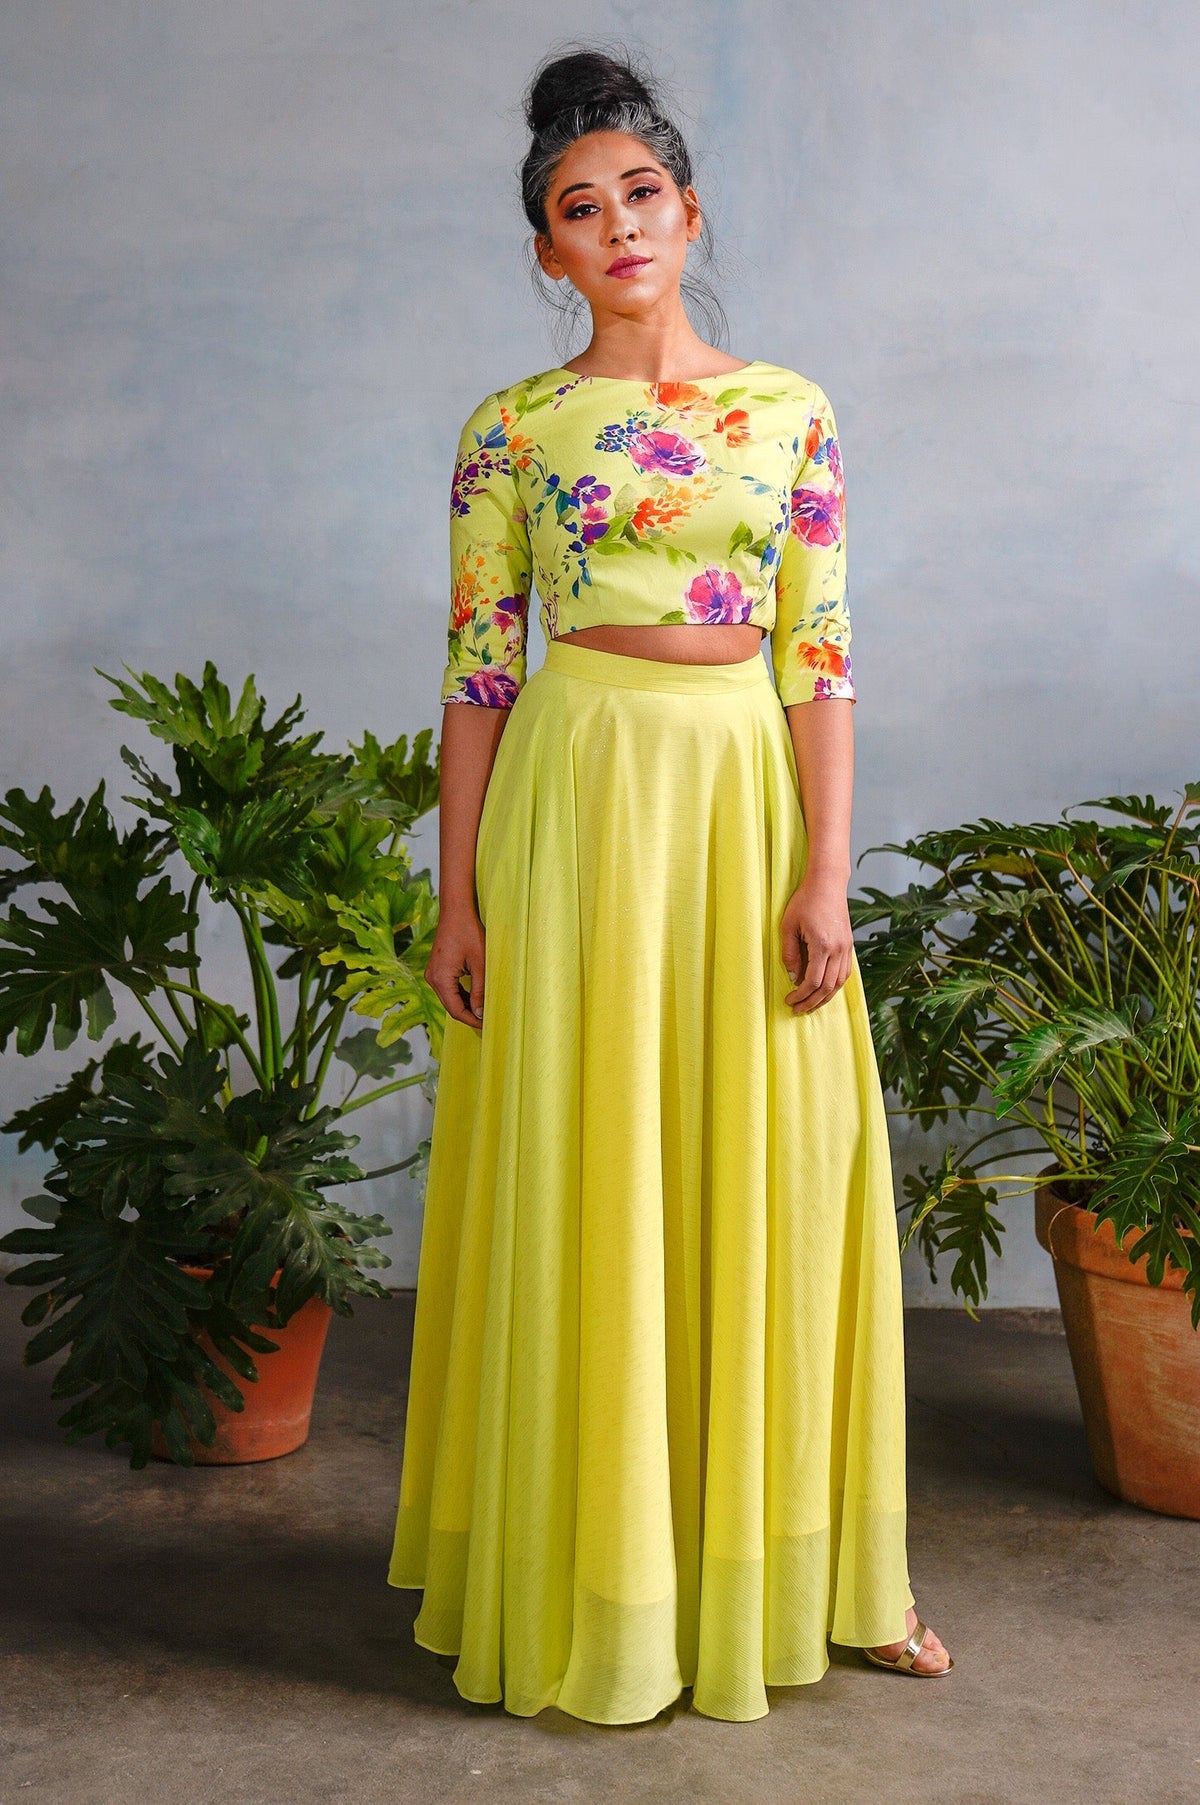 EZYA Metallic Chiffon Lehenga Skirt - Front View - Harleen Kaur - South Asian Womenswear